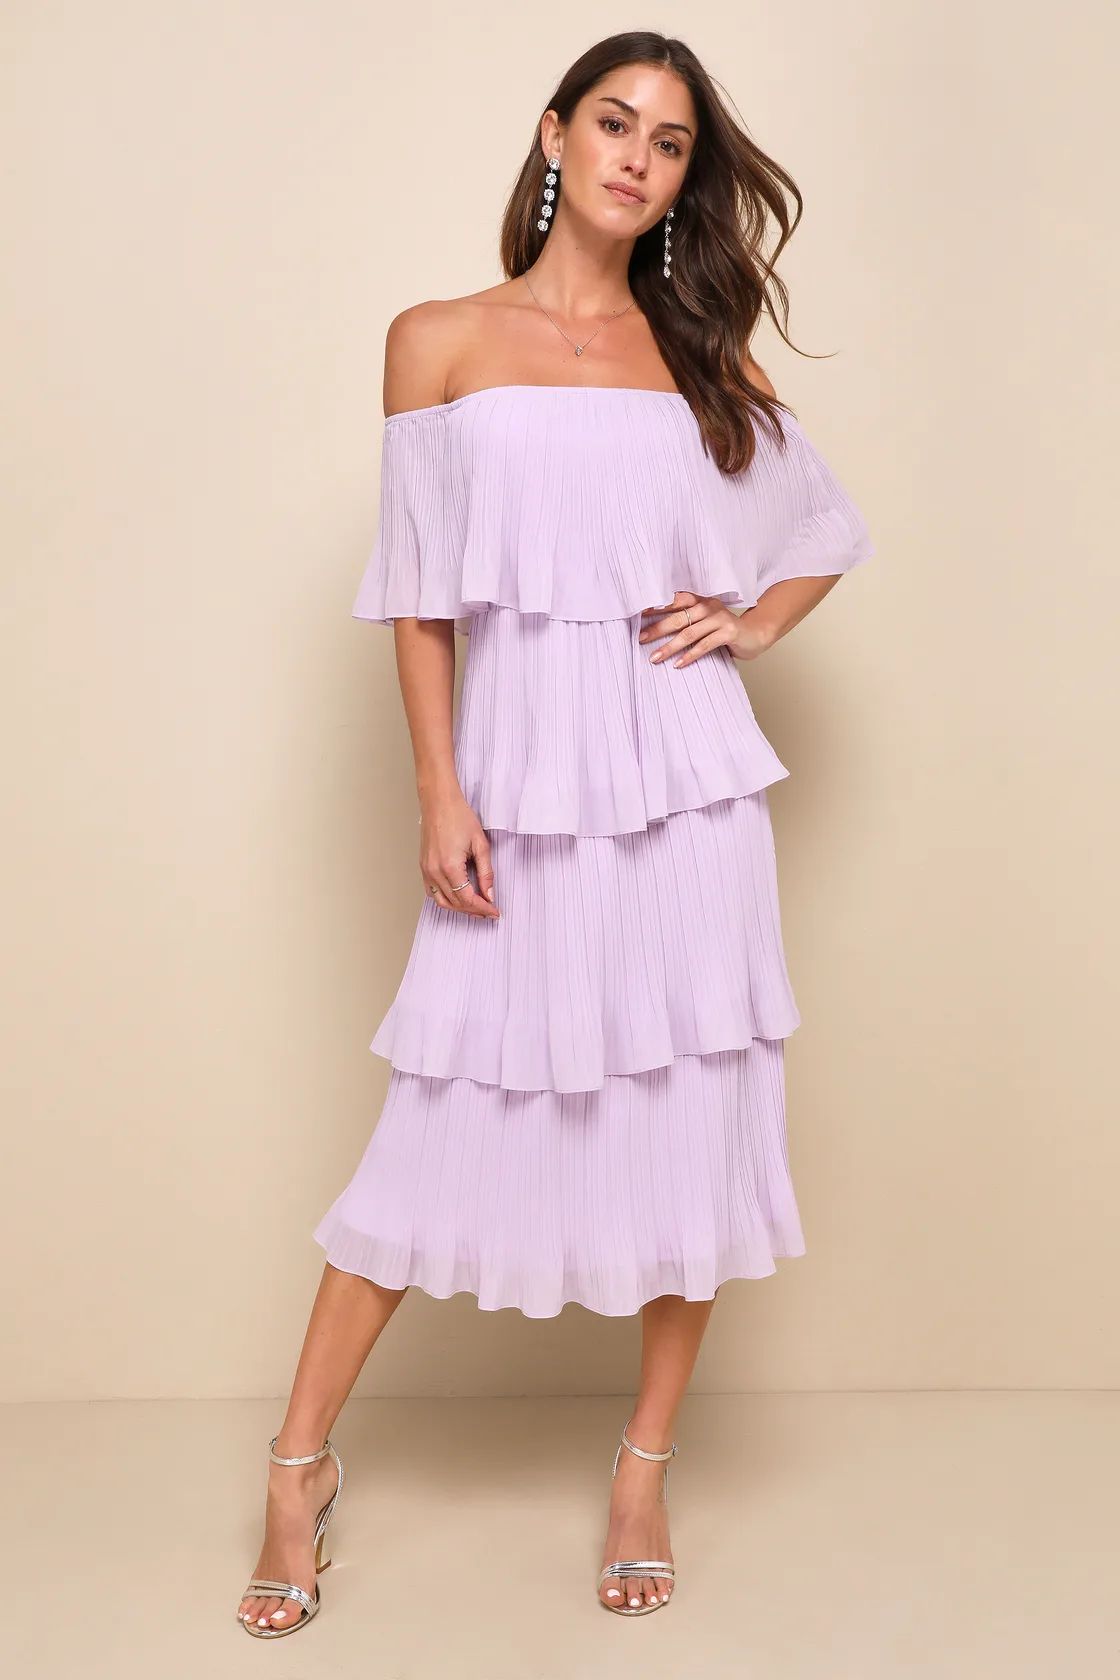 Gala Ready Lavender Off-the-Shoulder Ruffle Midi Dress | Lulus